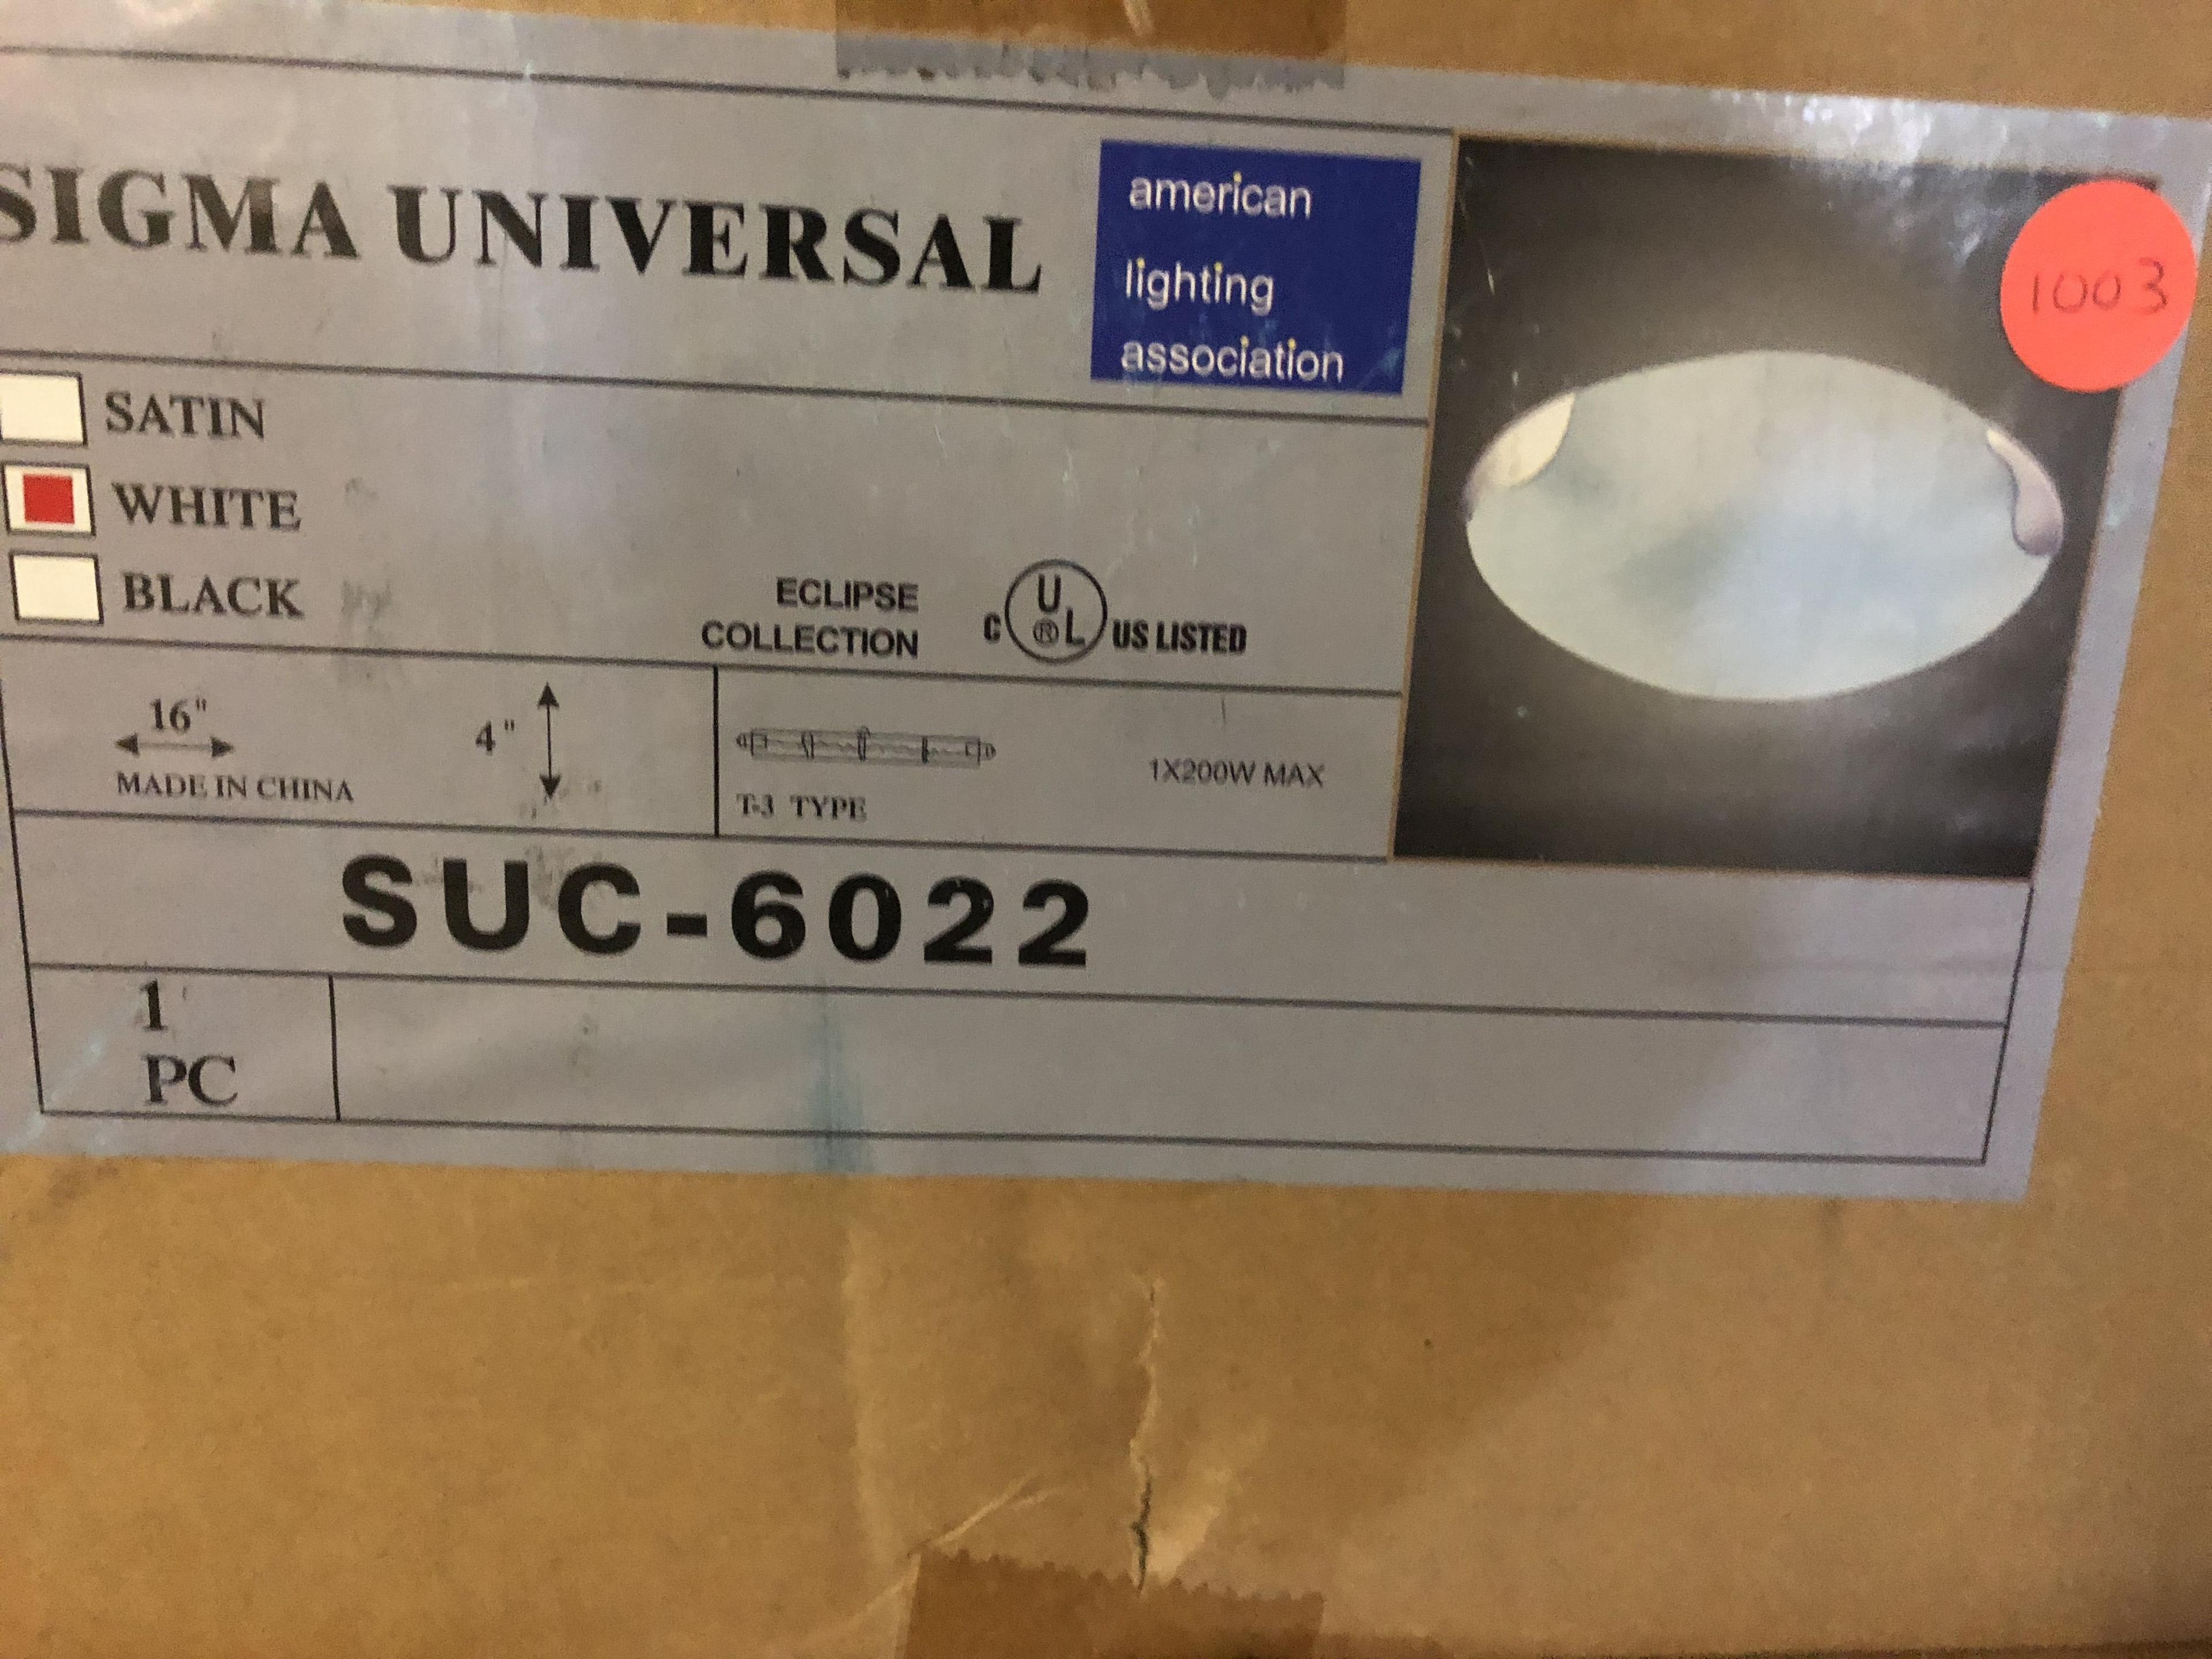 SUC-6022 Sigma Universal /white/ 1pc